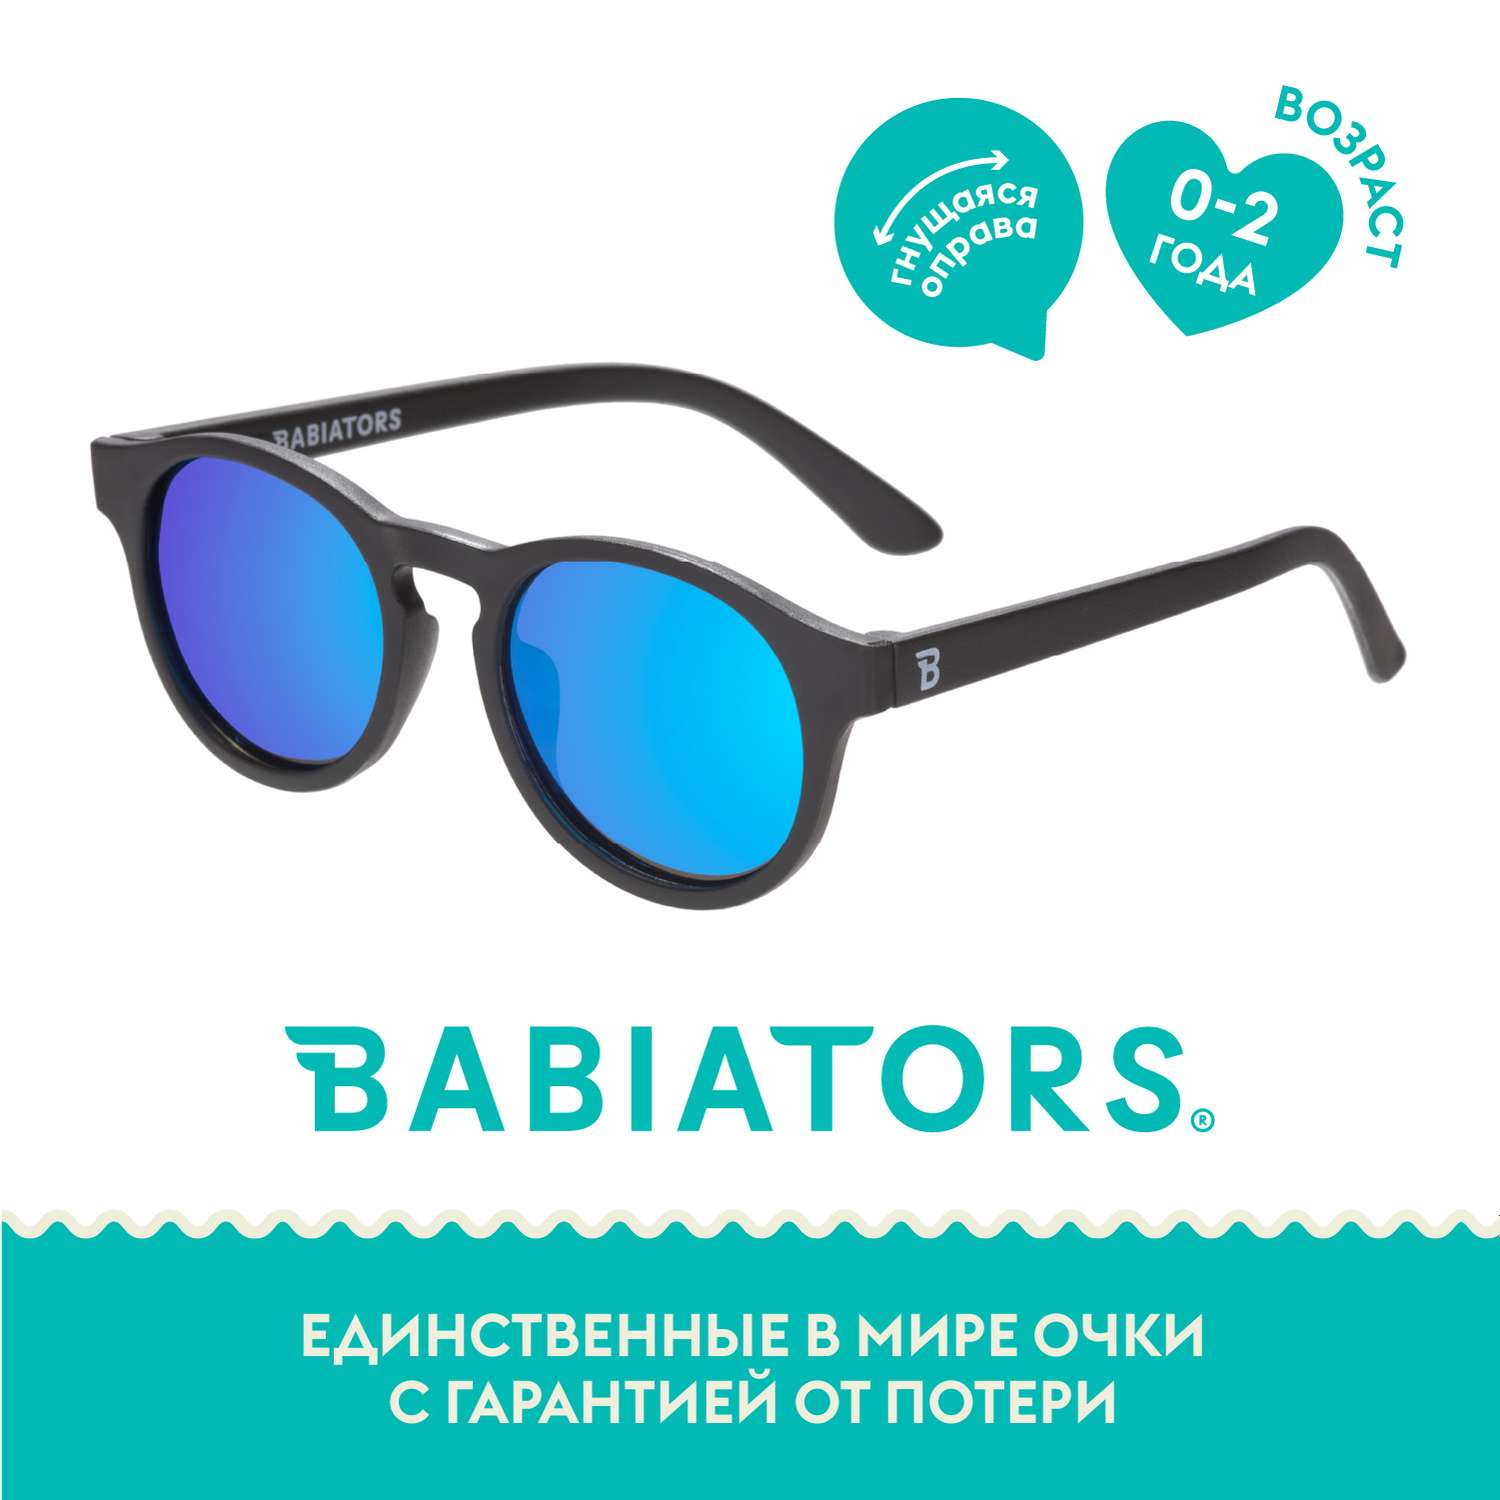 Солнцезащитные очки Babiators Blue Series Keyhole Polarized Агент 0-2 BLU-001 - фото 2